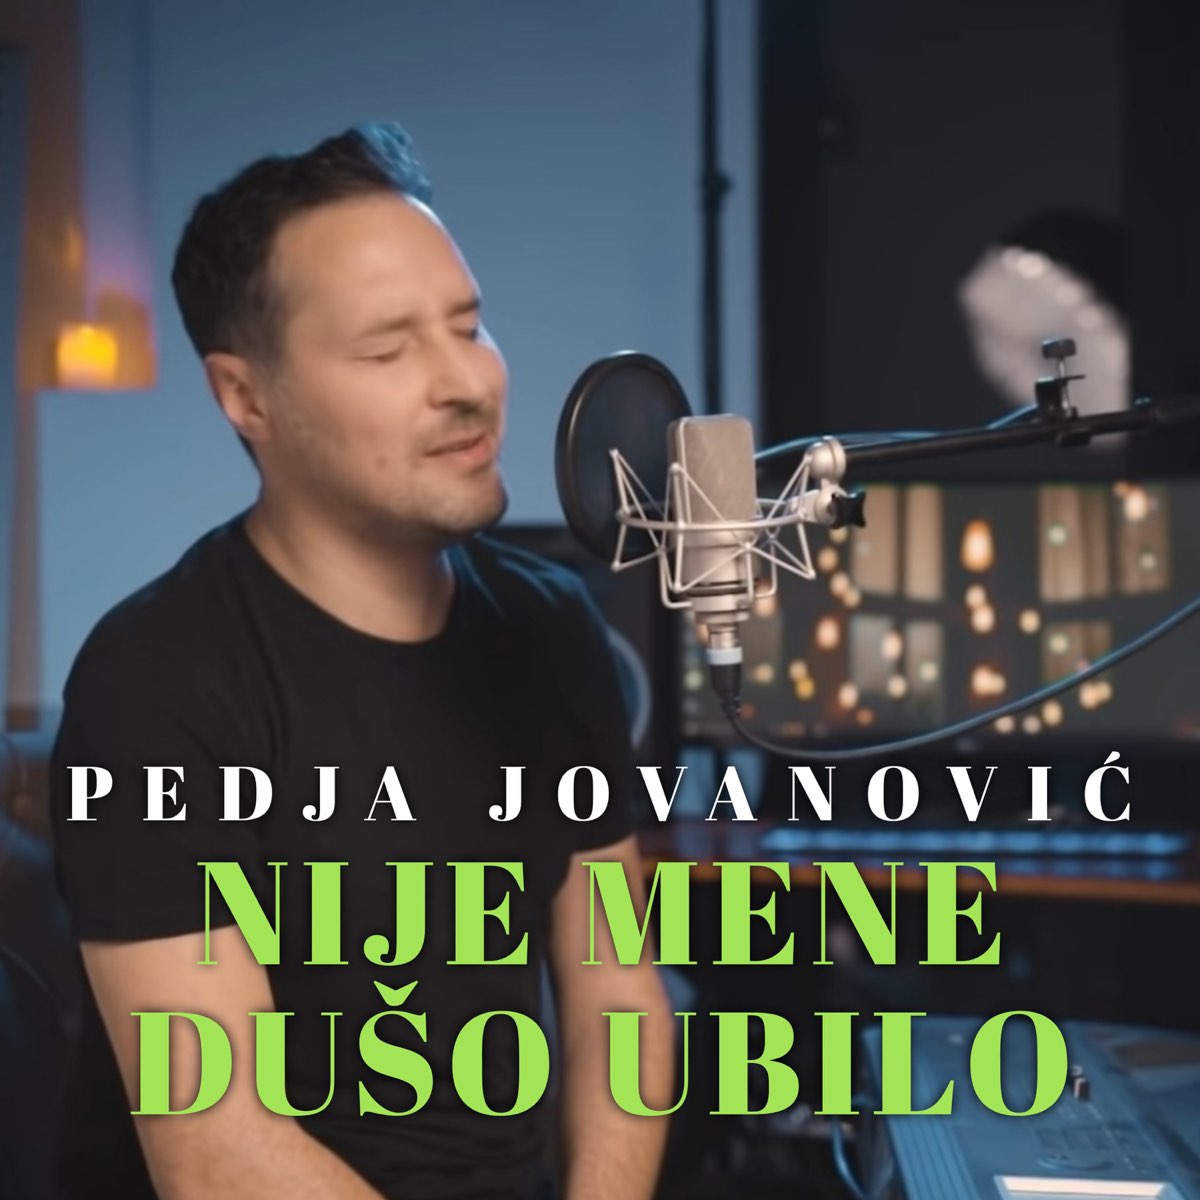 Nije mene dušo ubilo (Cover) - Single - Album by Pedja Jovanovic - Apple  Music